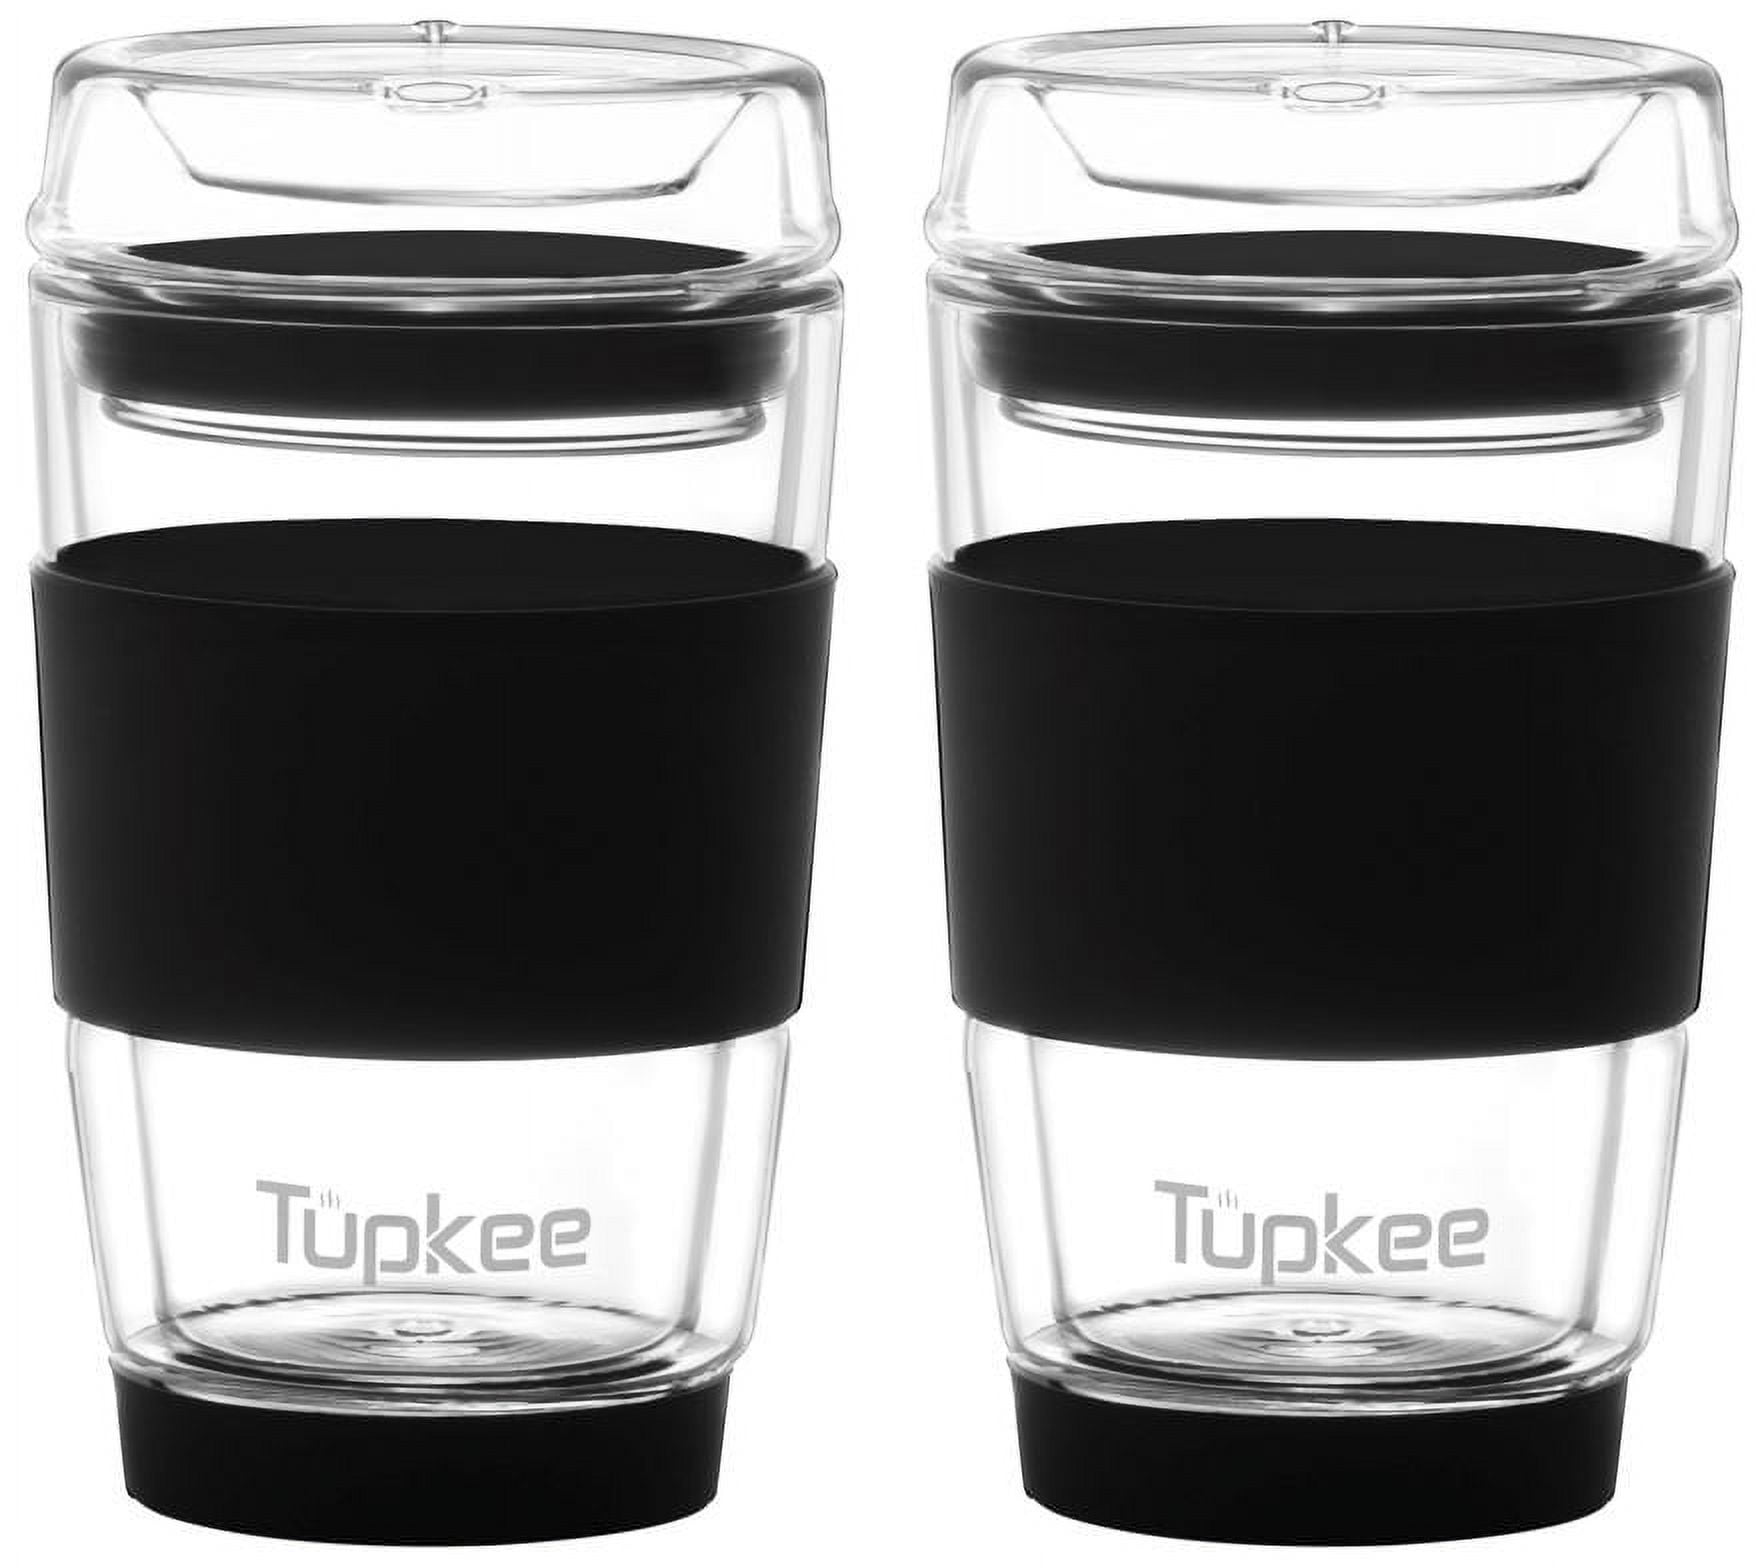 Tupkee Leak-Proof Glass Tumbler, 14-Ounce